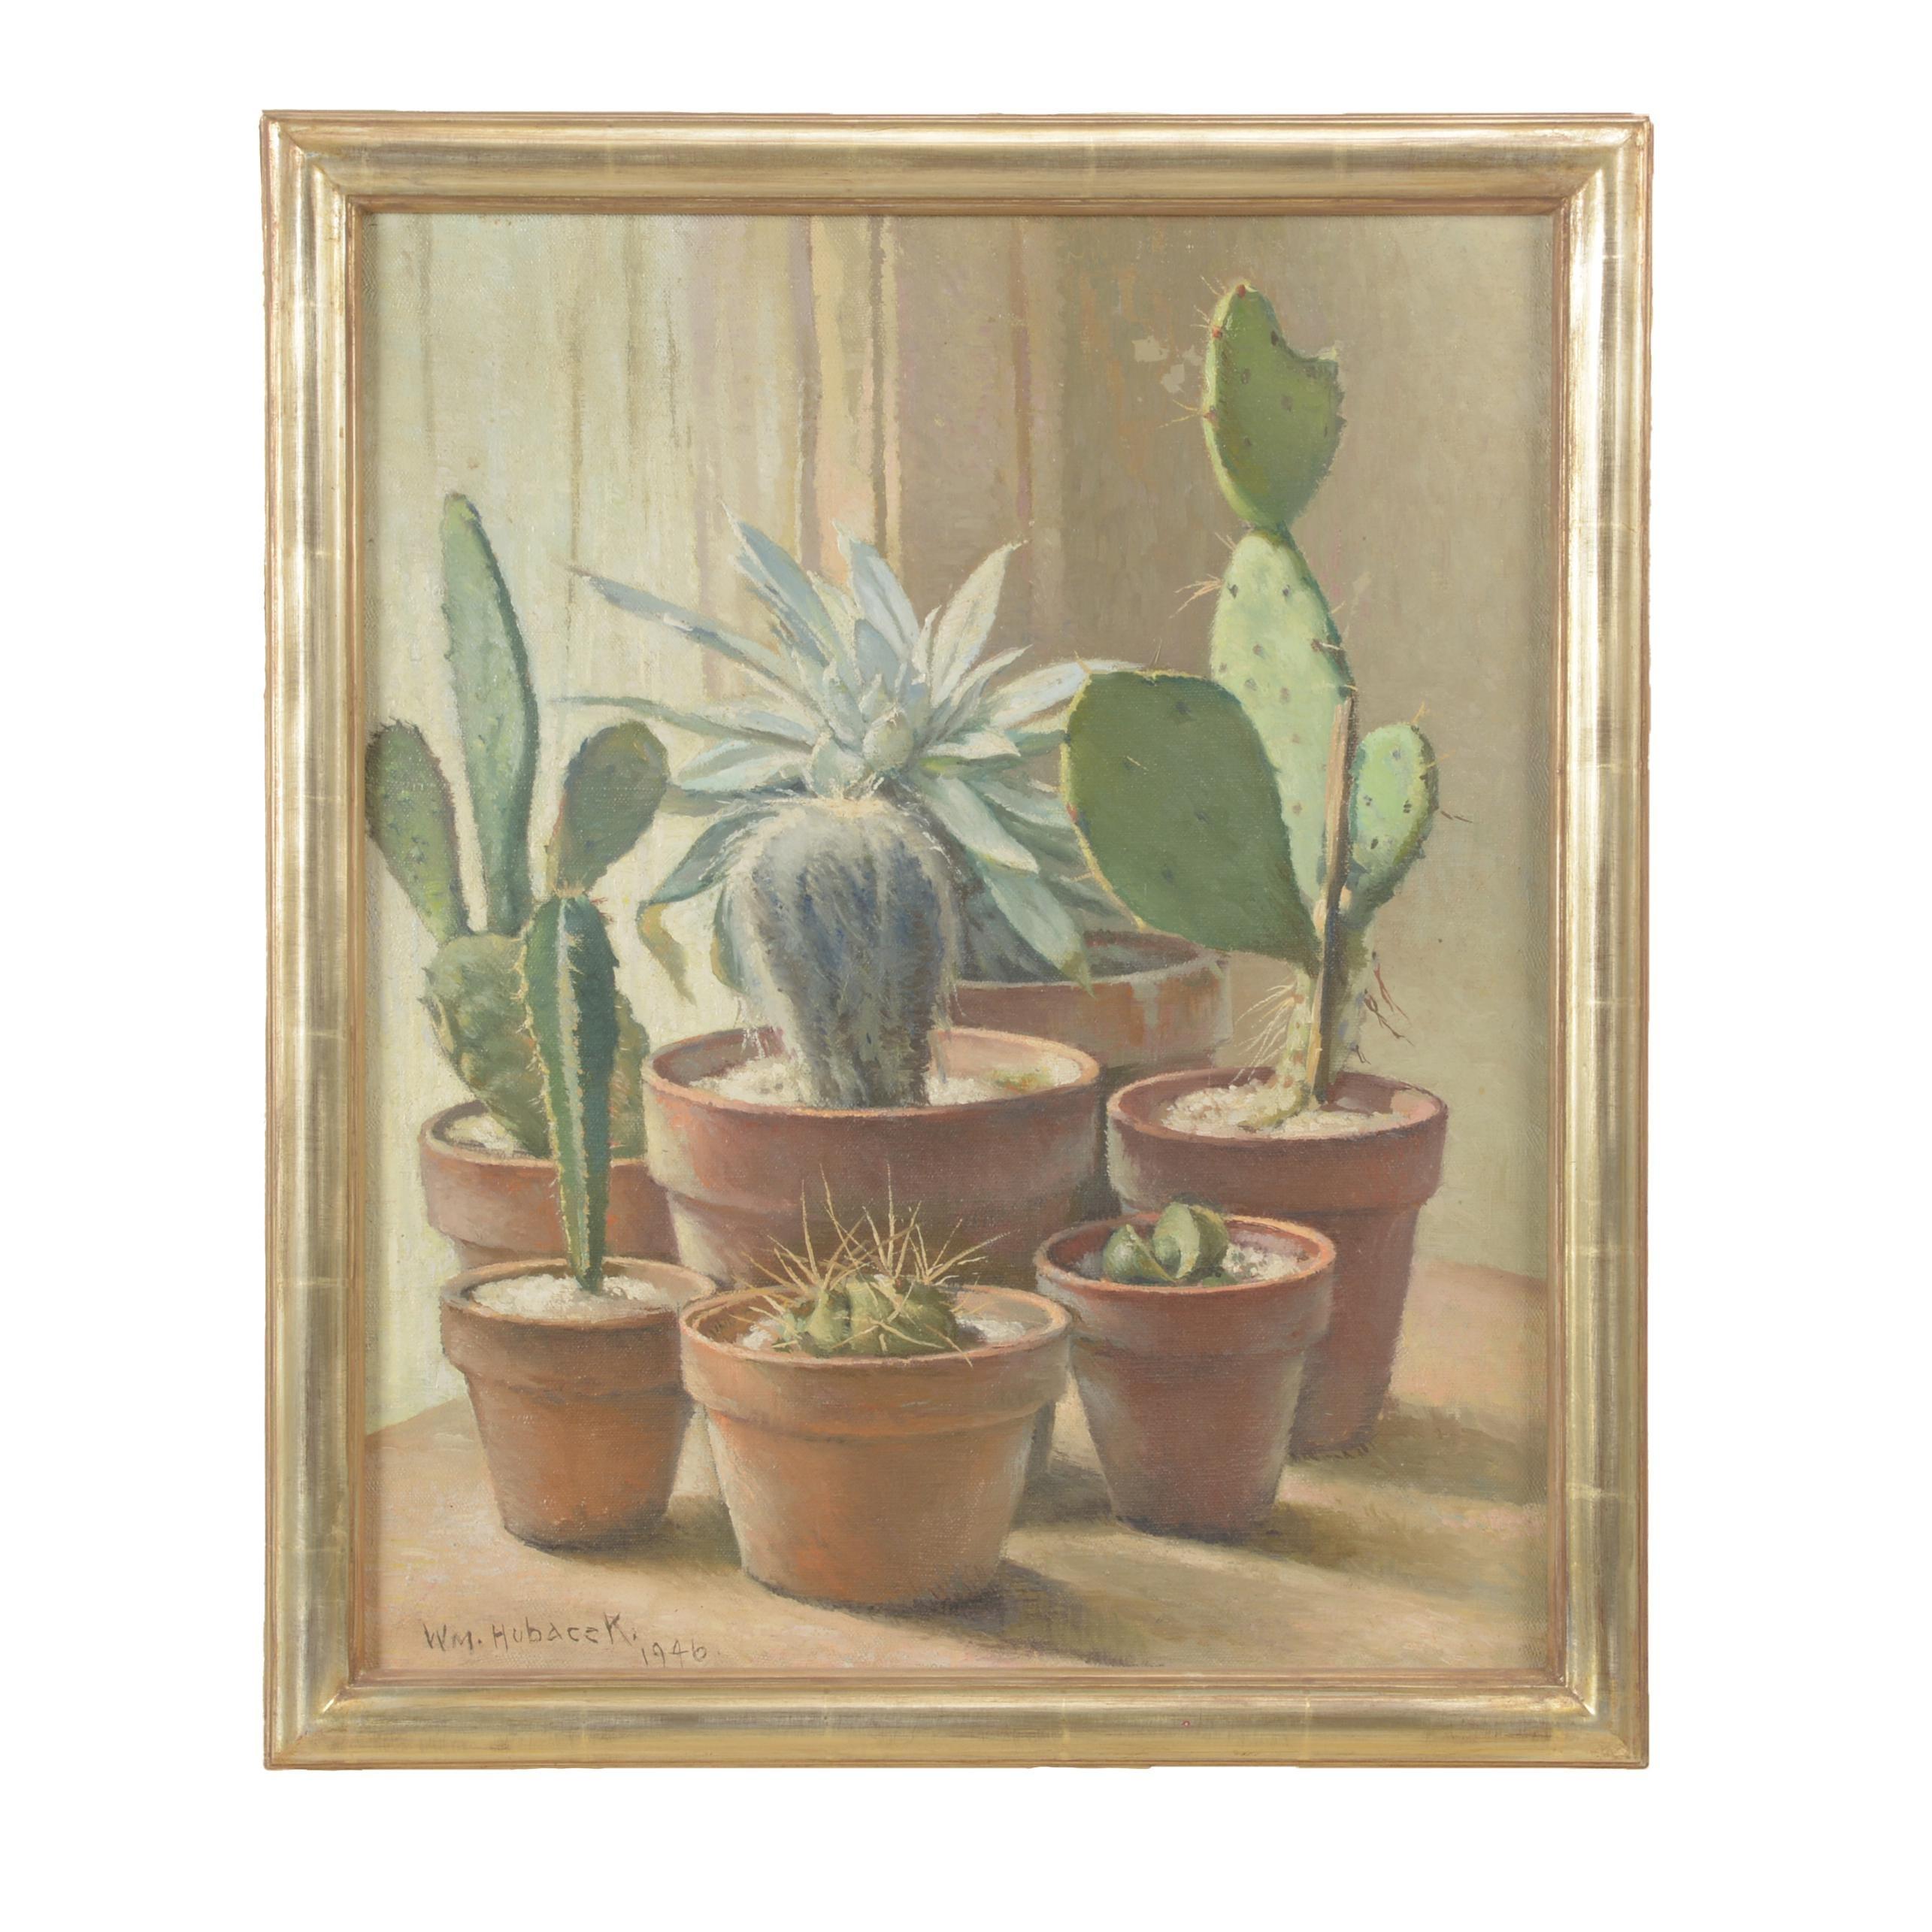 William Hubacek 'Cactus Plants' Still Life, Oil Painting